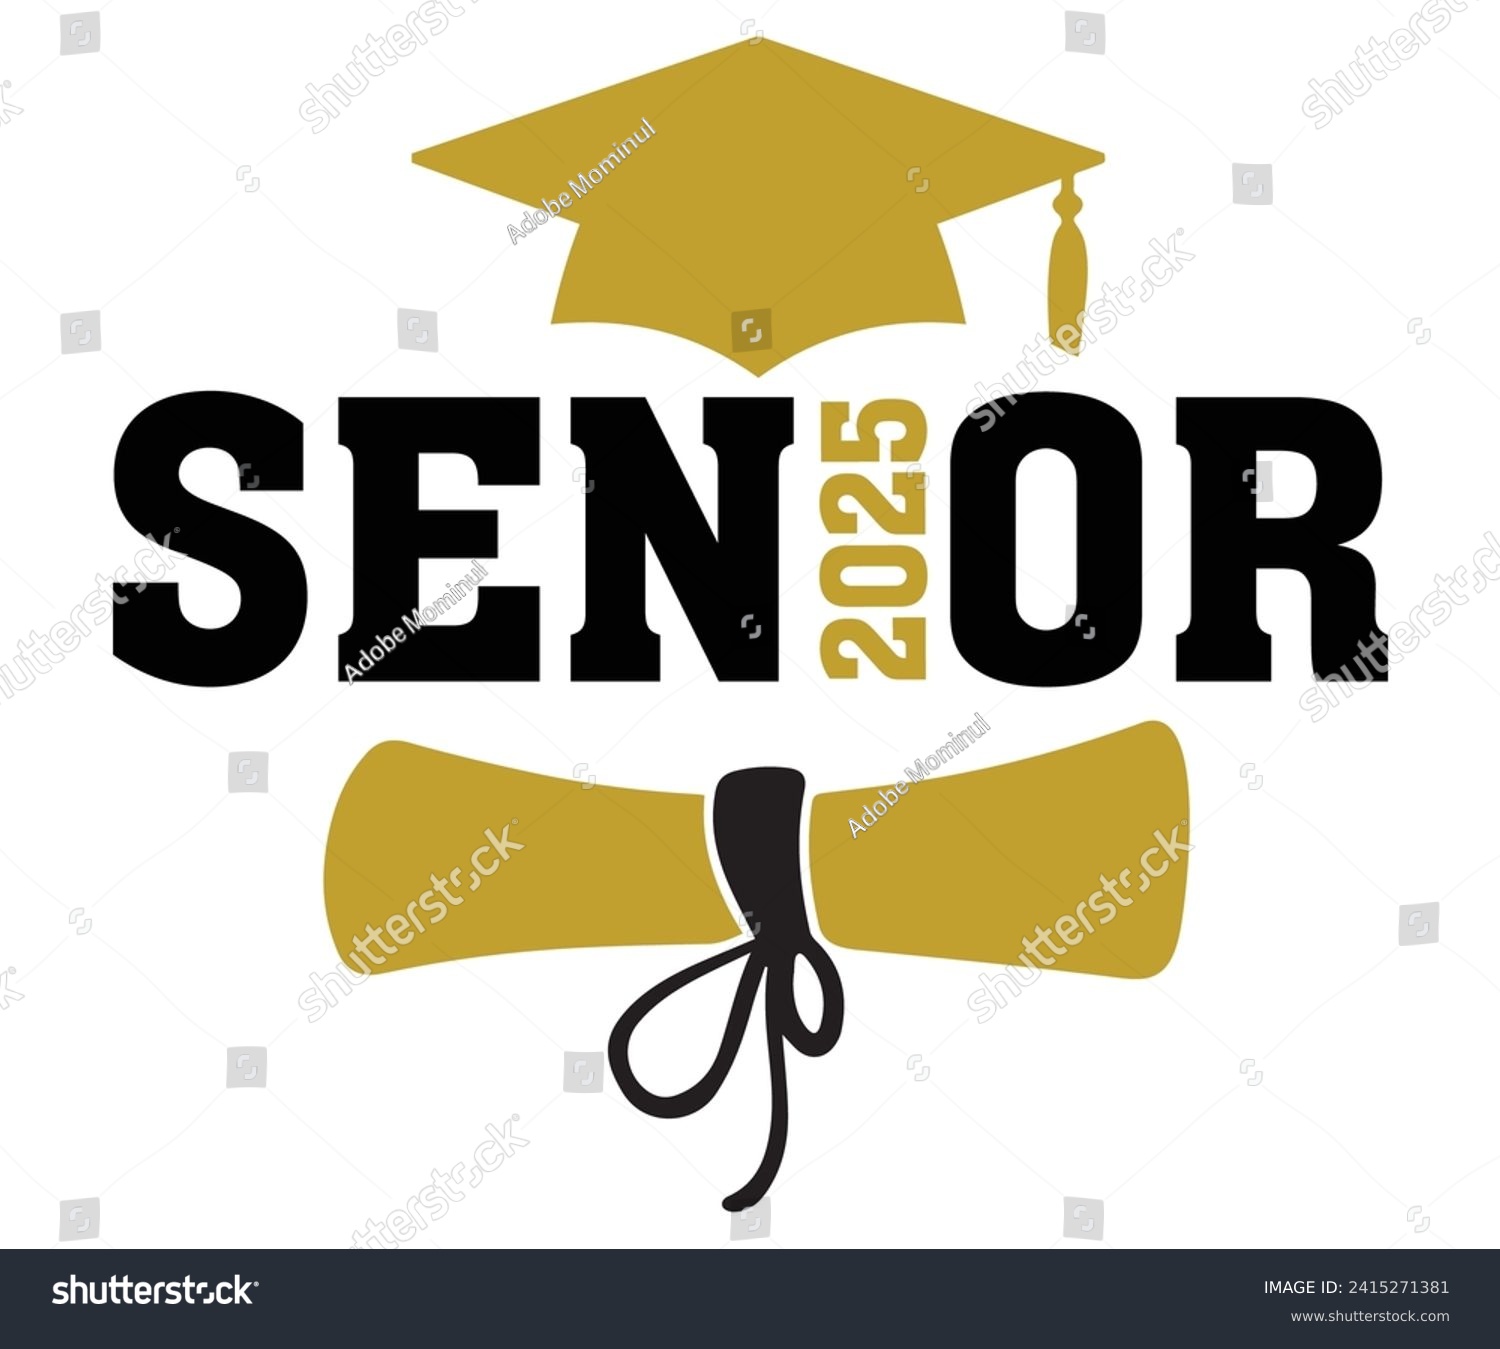 SVG of Senior 2024,2025,2026 T Shirt,Graduation Svg,Senior Svg,Graduate T shirt,Graduation cap,Graduation 2024 Shirt,Family Graduation Svg,Pre-K Grad Shirt,Graduation Qoutes,Graduation Gift Shirt,Cut File, svg